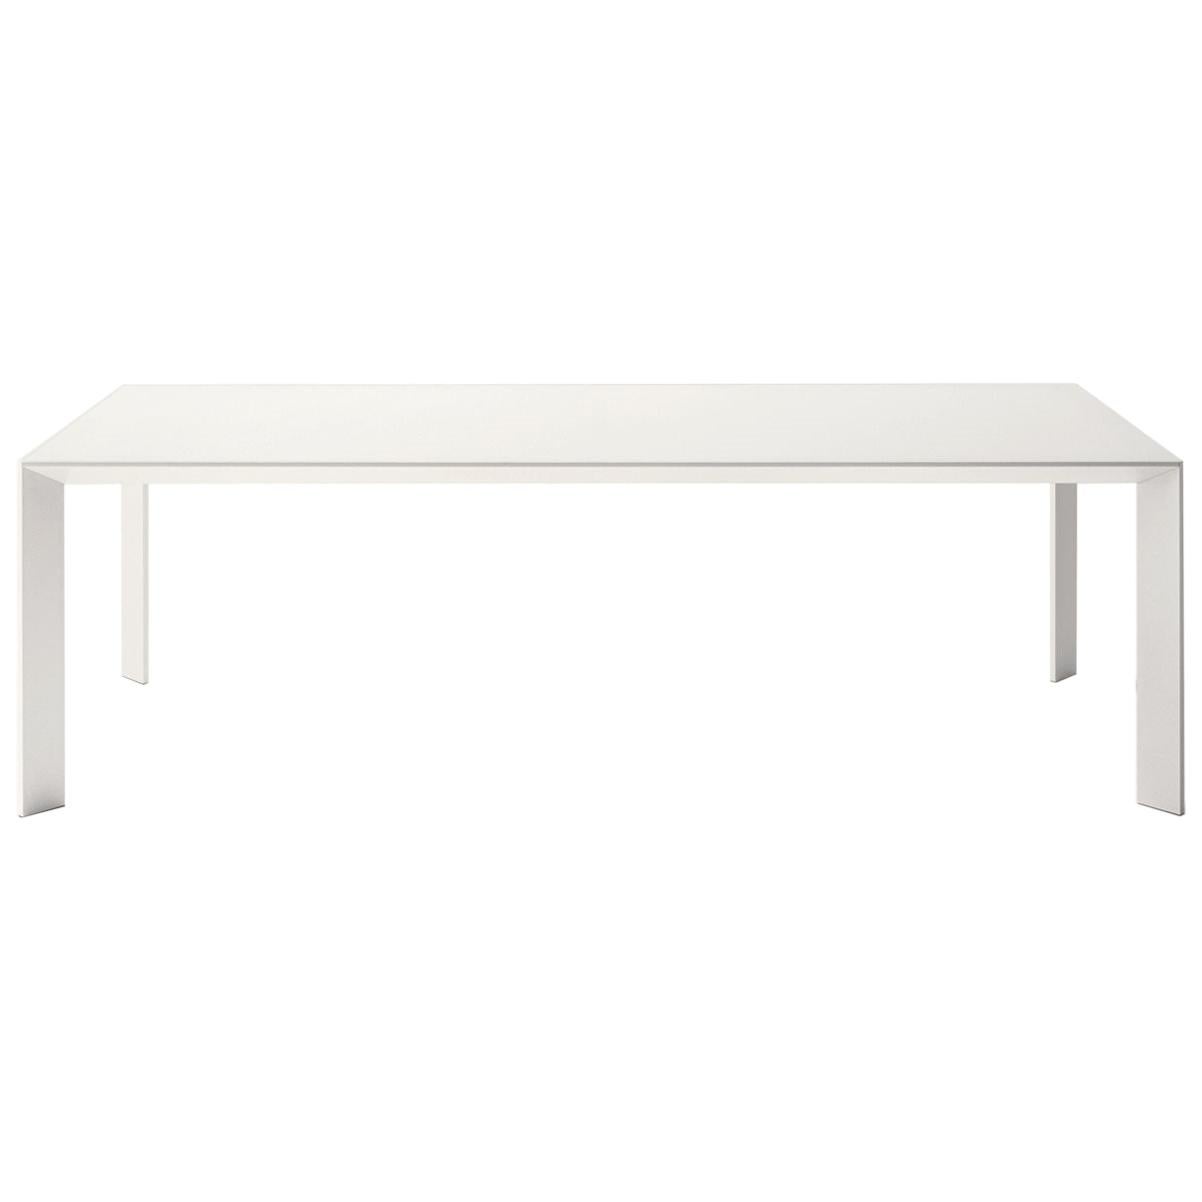 Desalto Mac Table Designed by Pierluigi Cerri